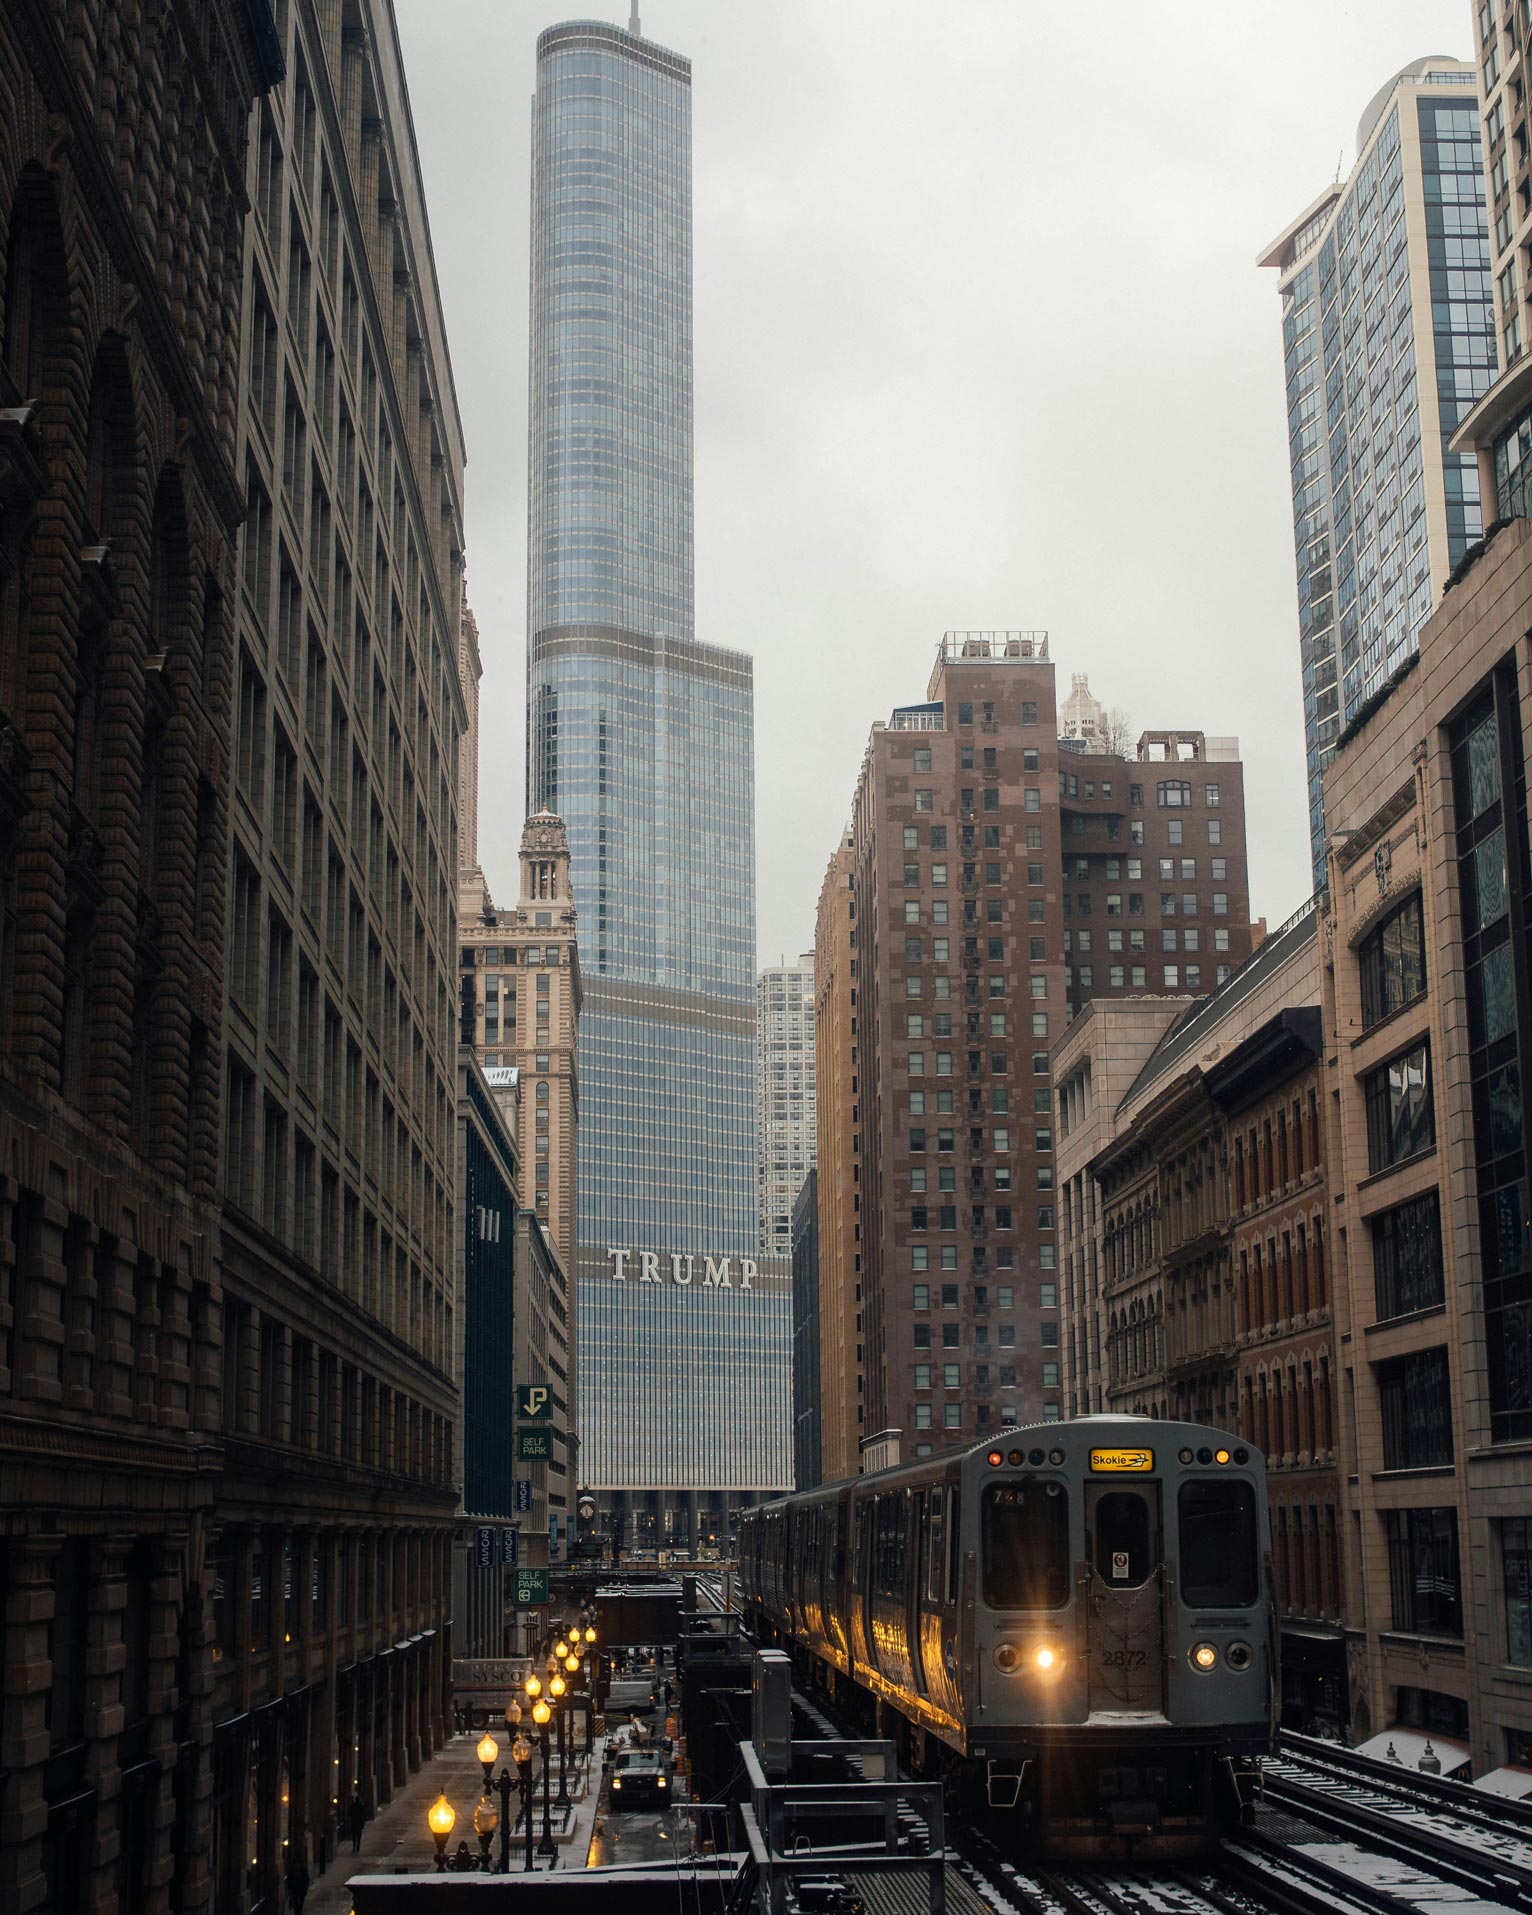 Trump Tower in Chicago, USA. Image via Kieran / unsplash.